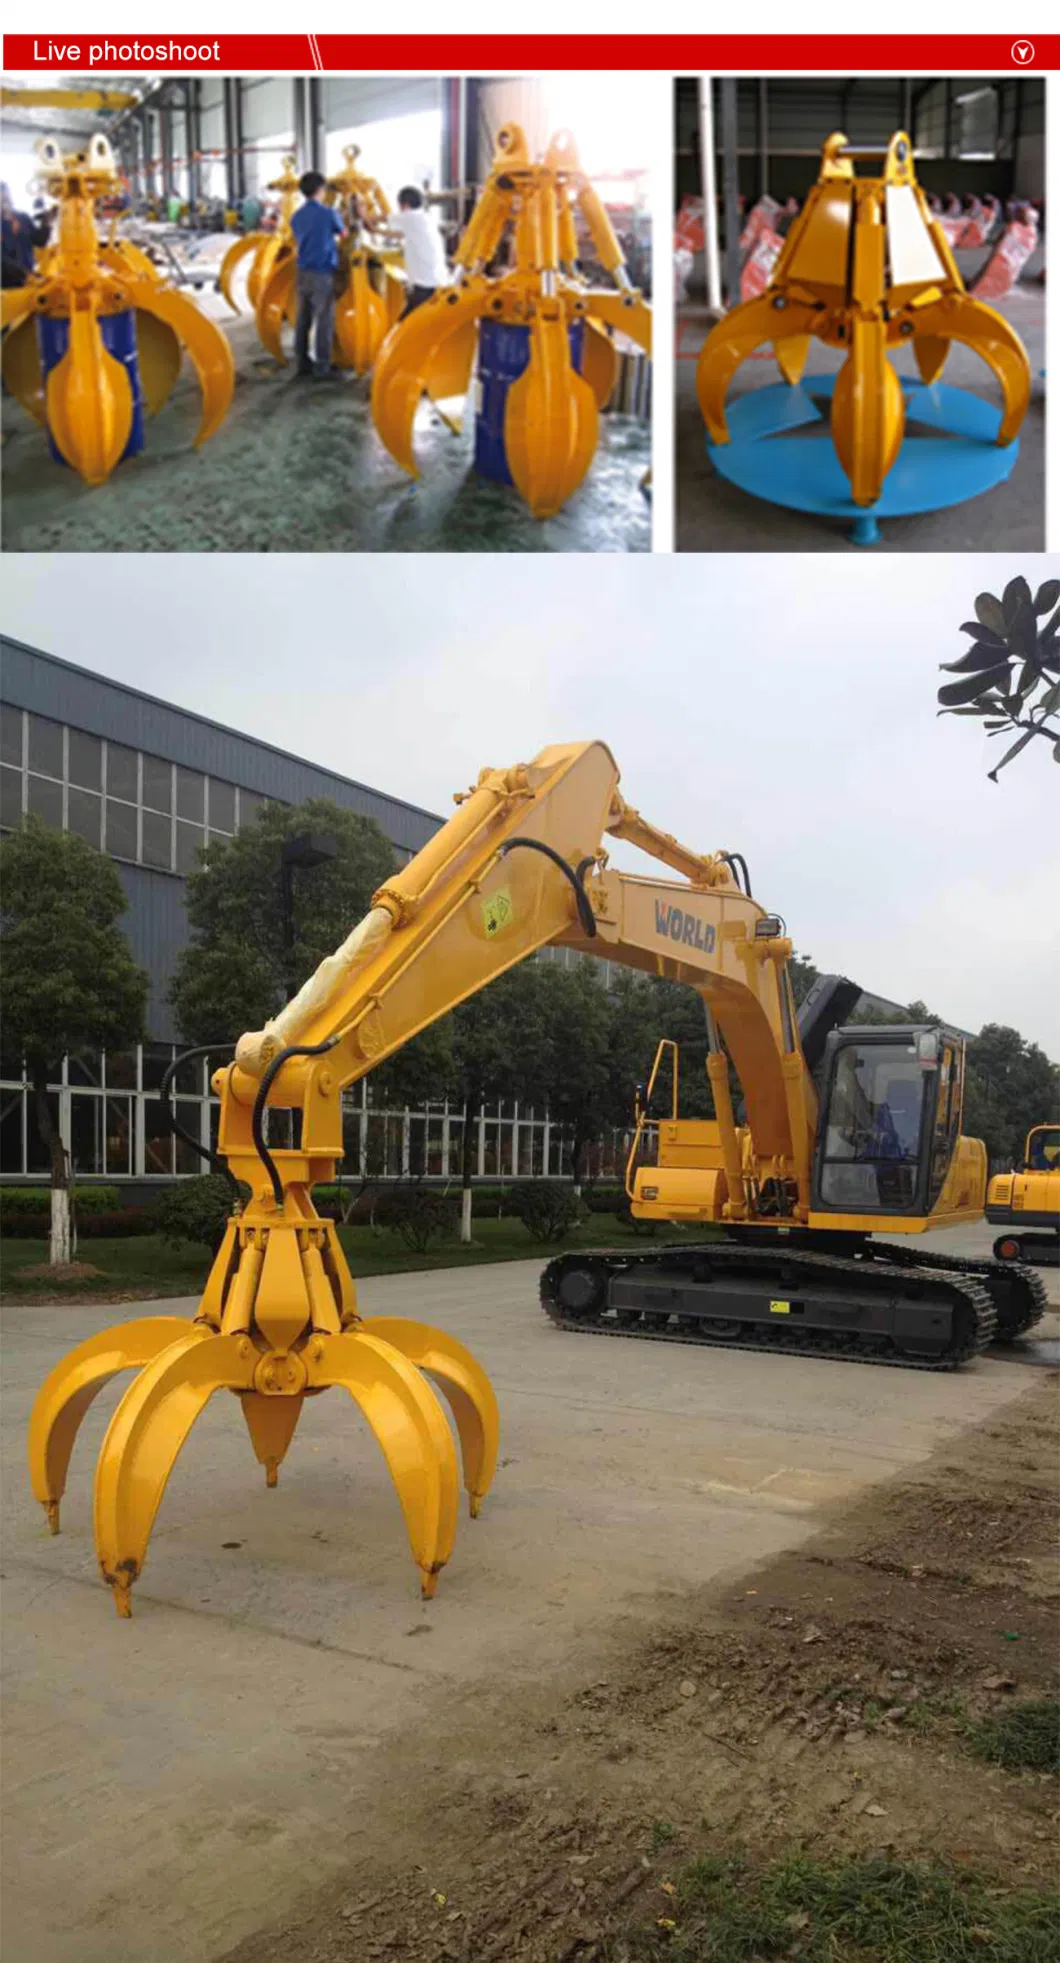 Excavator Grab Orange Peel Grapple Hydraulic Rotating Demolition Grab